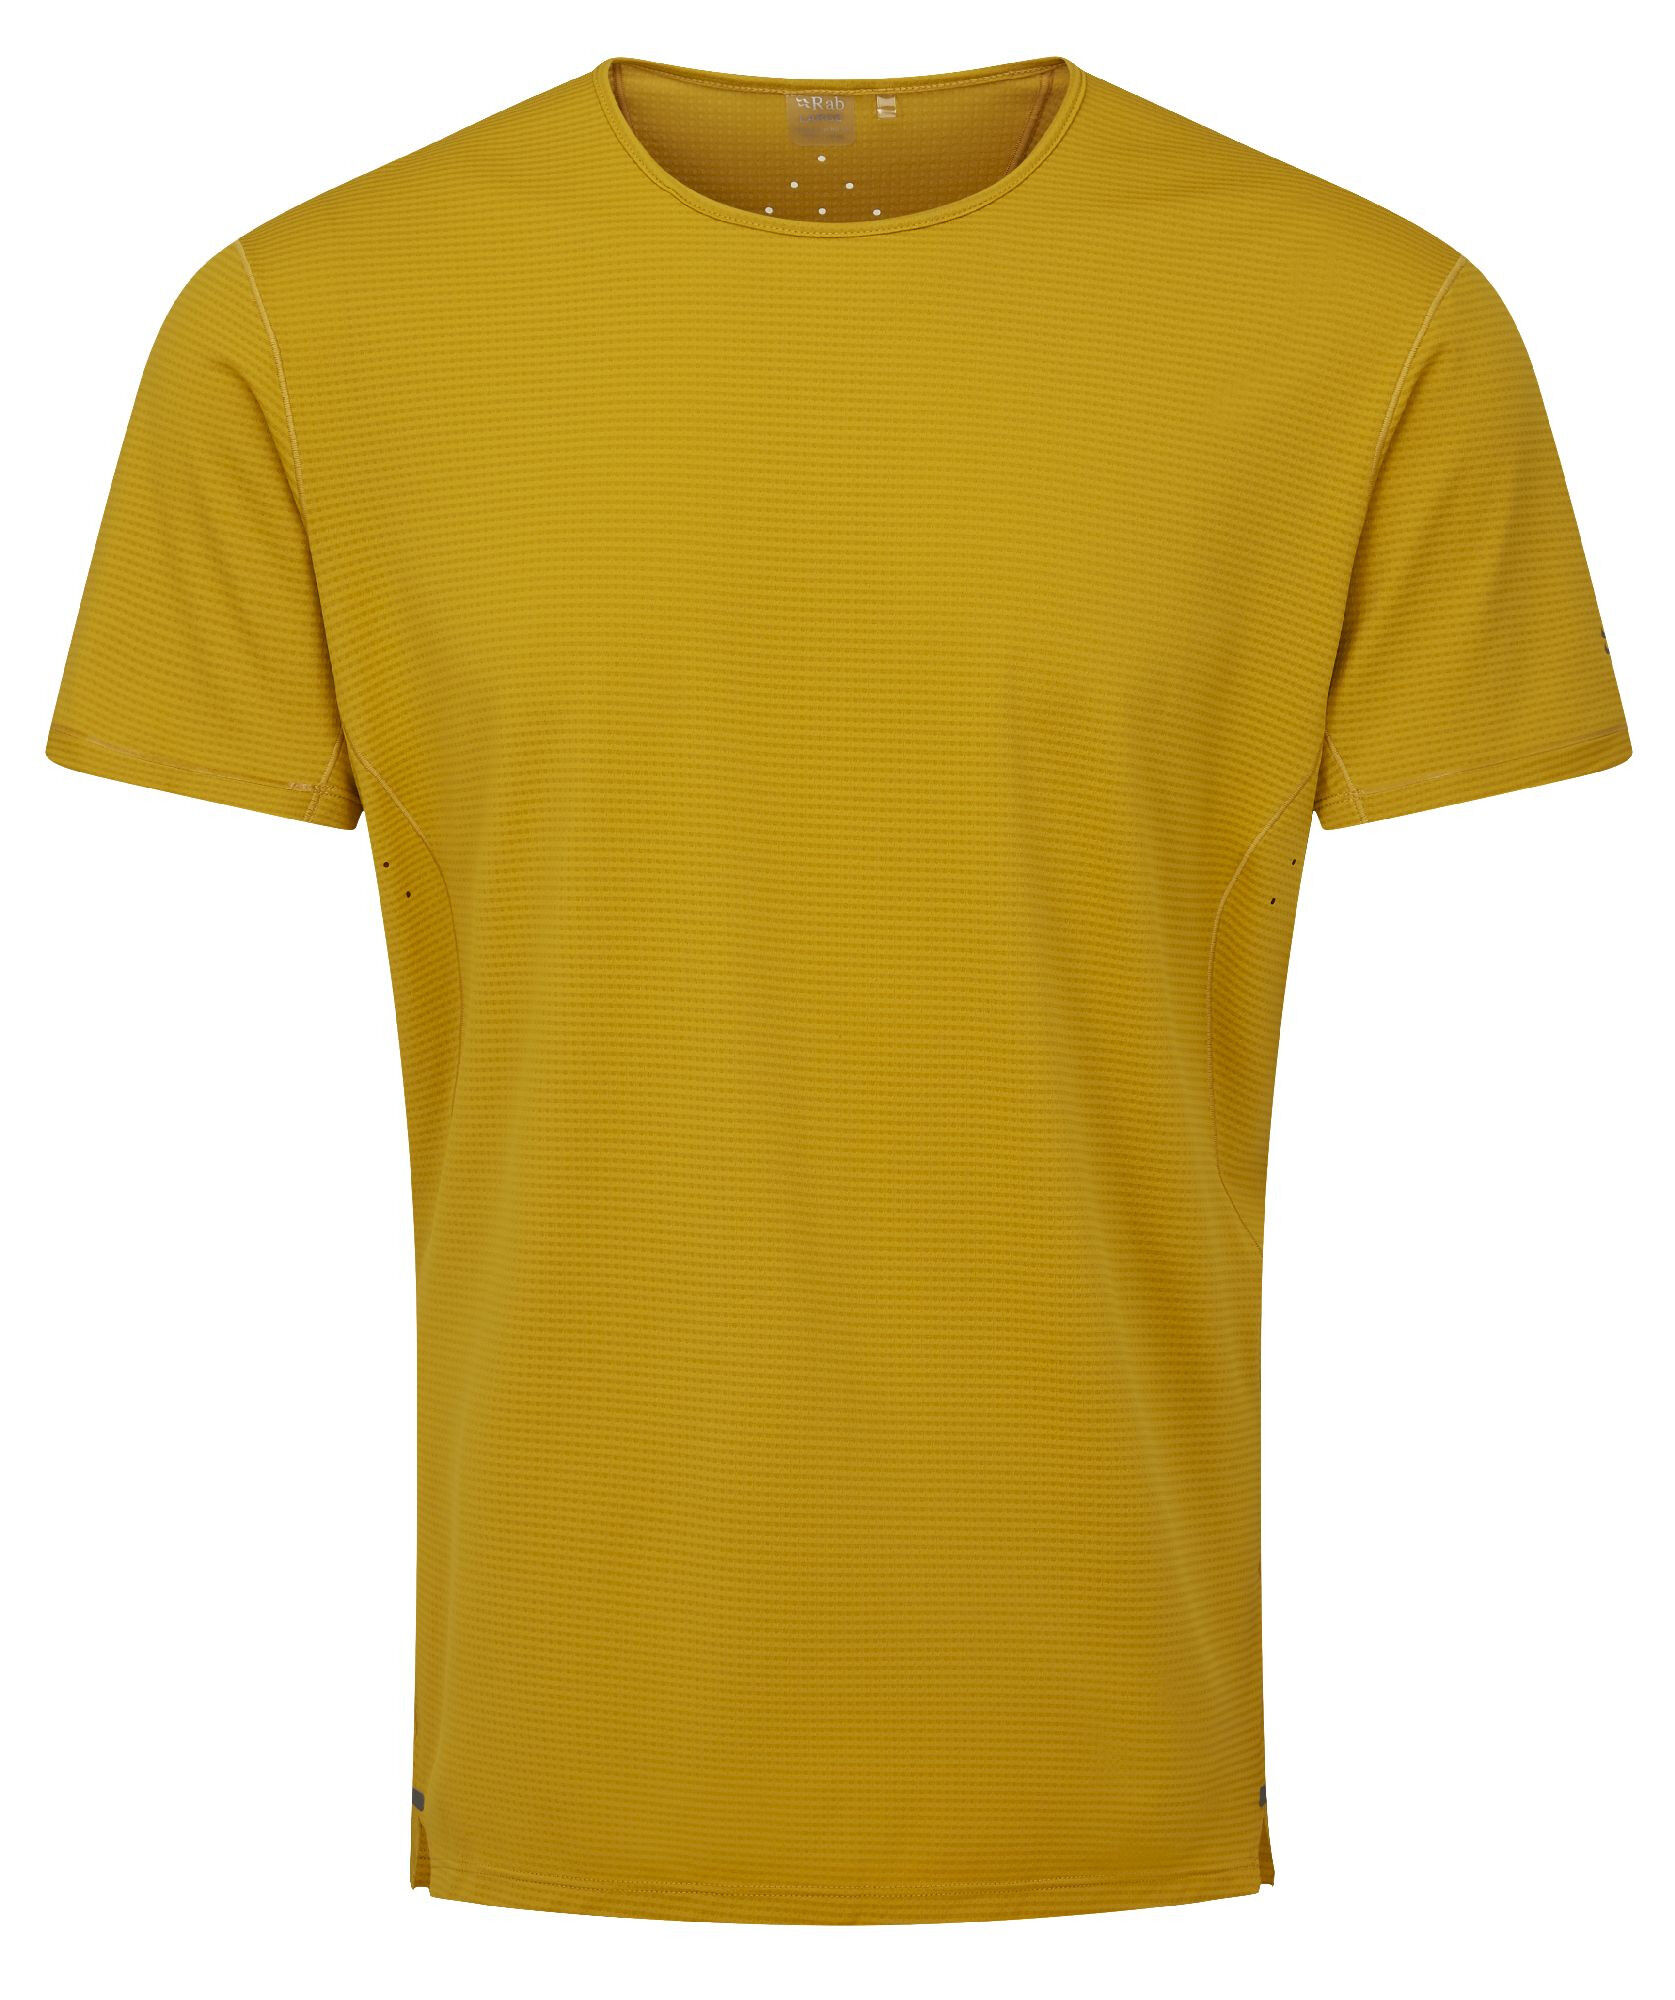 Rab Sonic Ultra Tee - T-shirt - Uomo